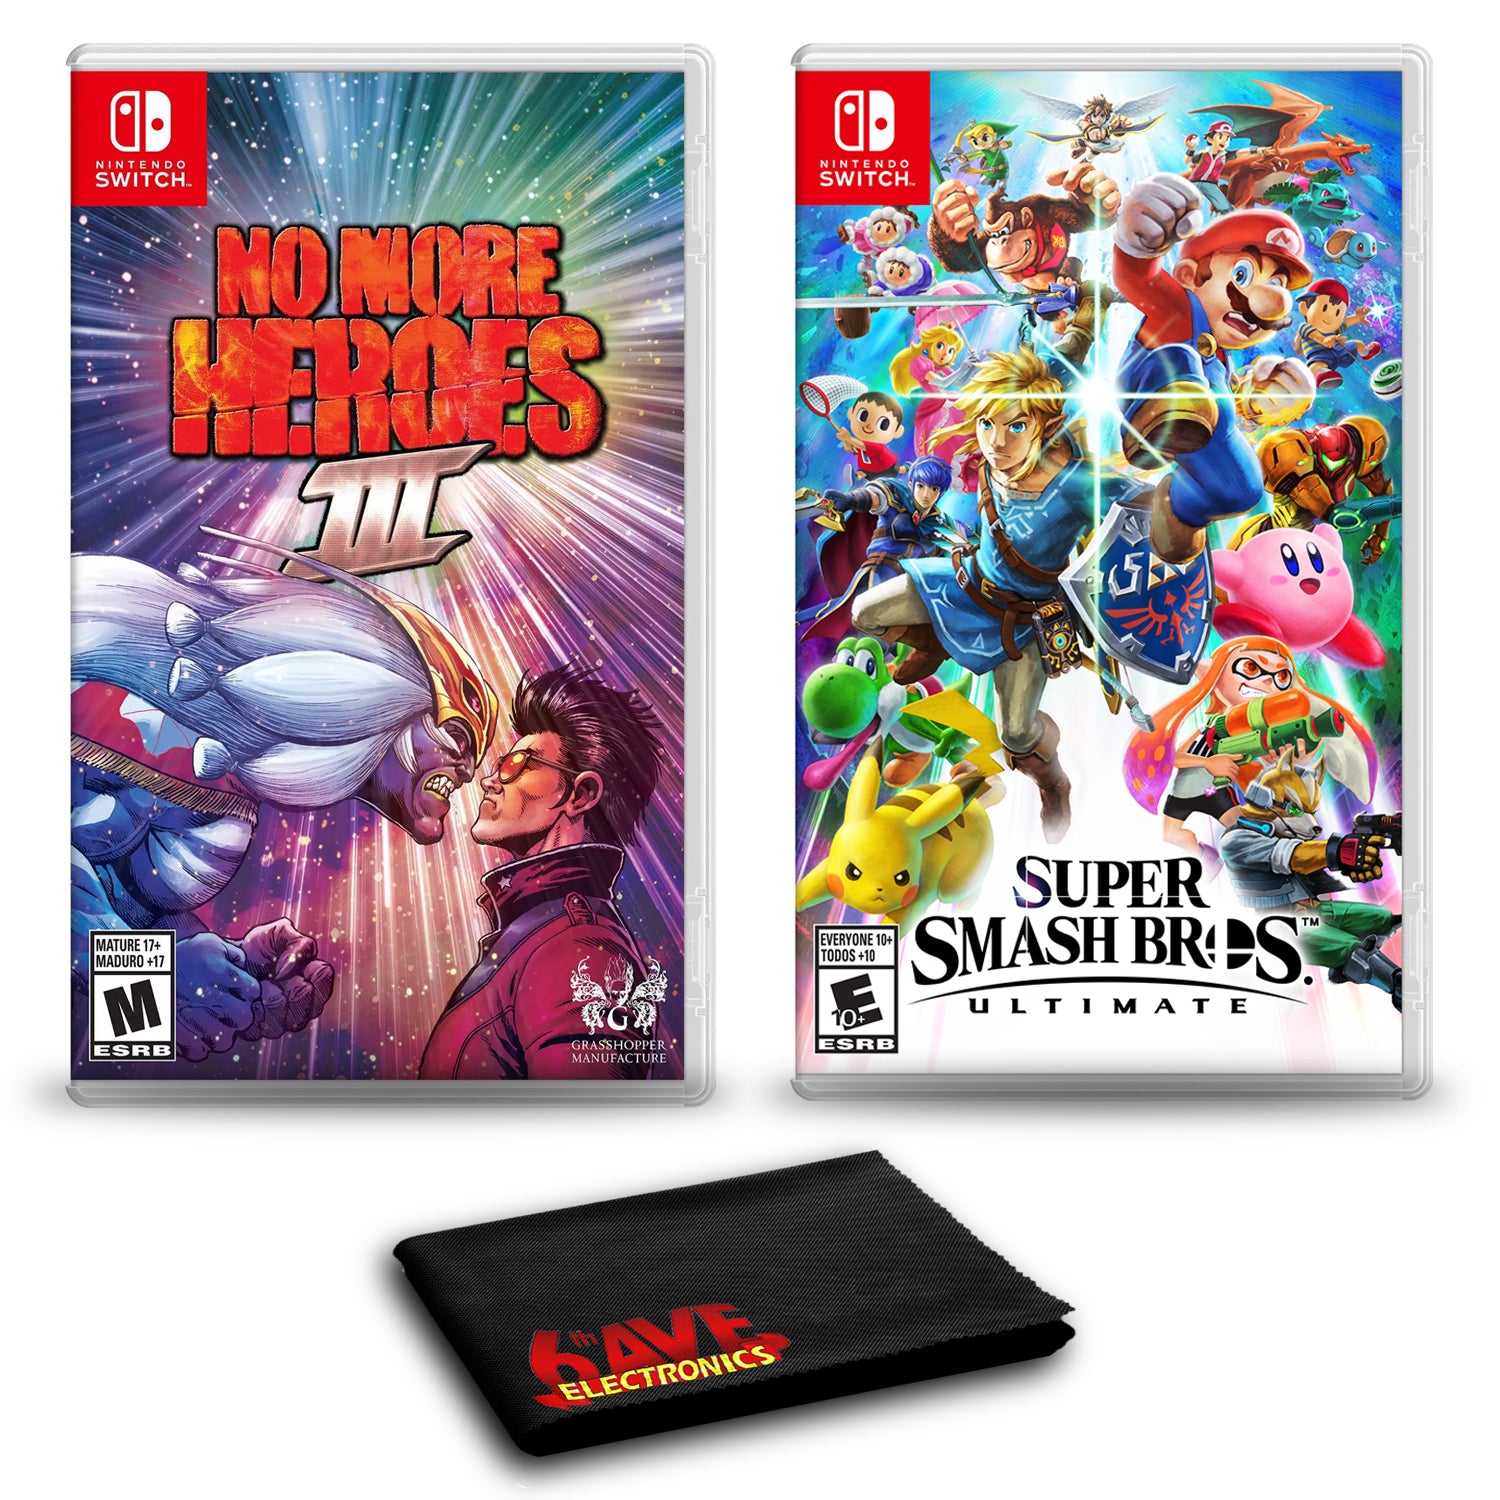 No More Heroes 3 Bundle with Super Smash Bros. Ultimate - Nintendo Switch